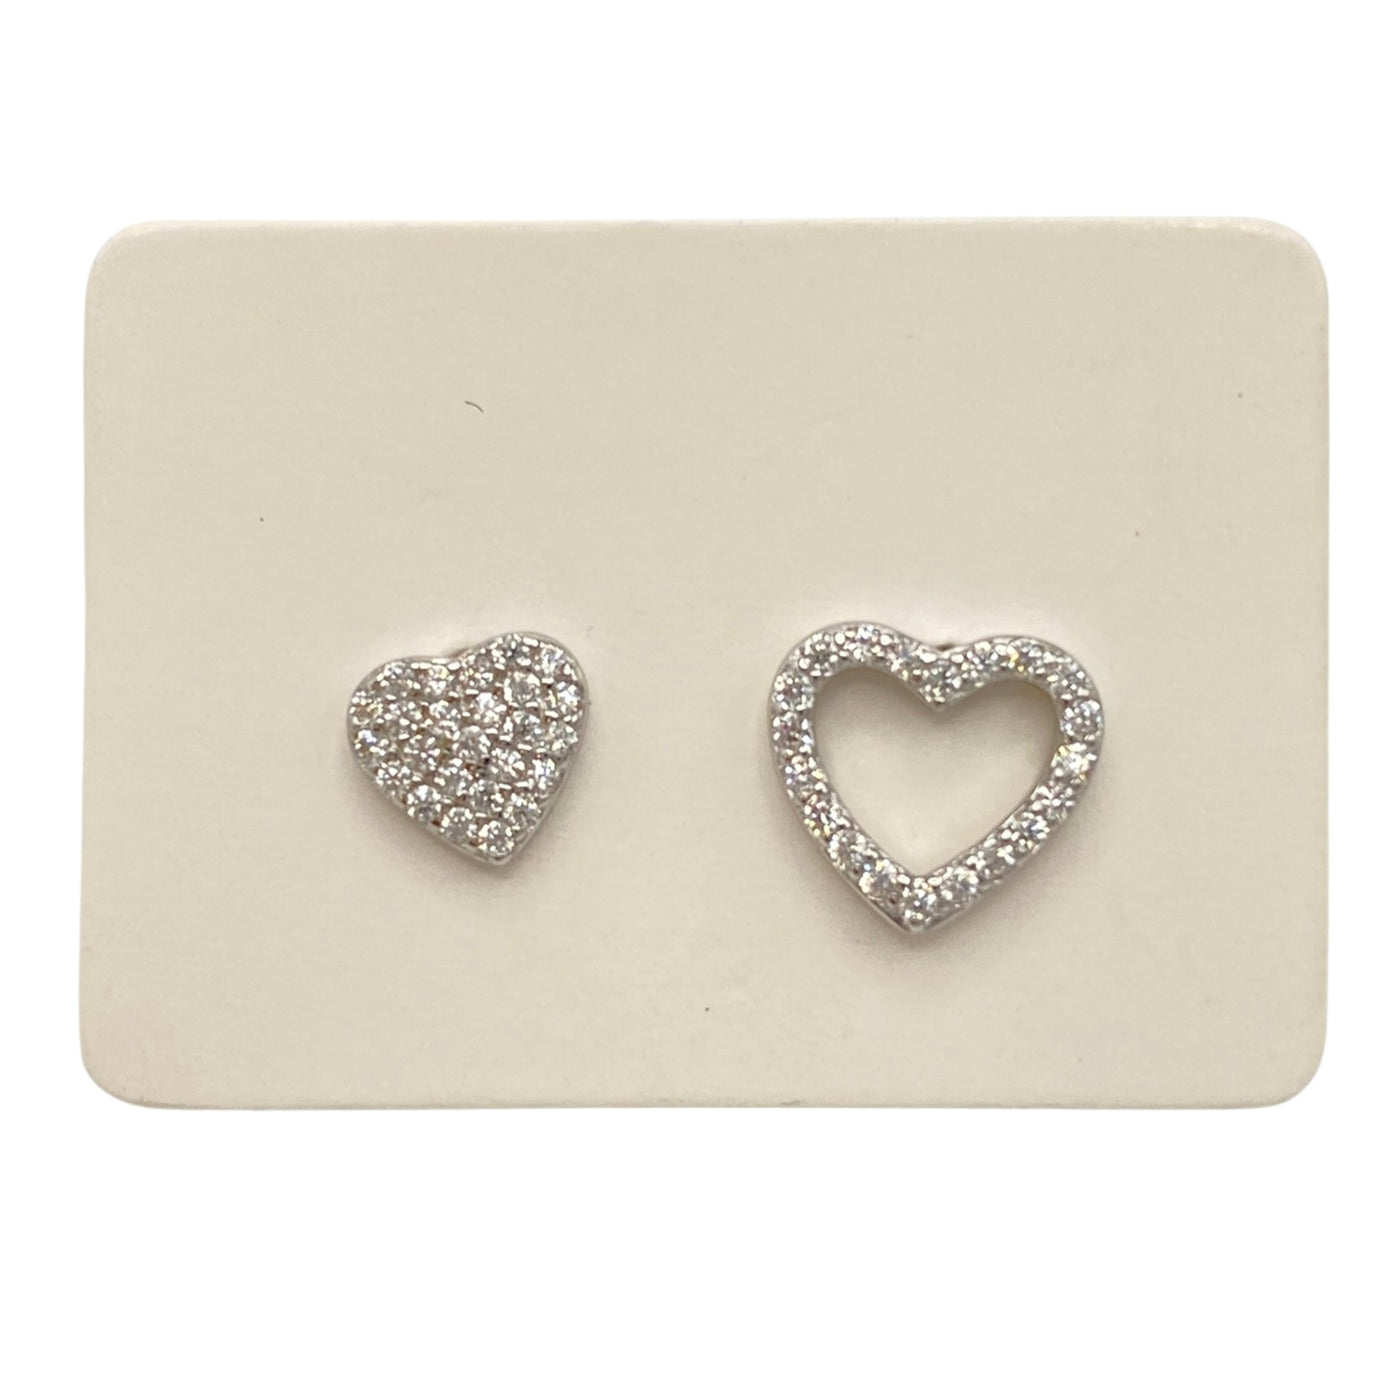 Pack of 5 silver stud heart earrings - 6-9 mm